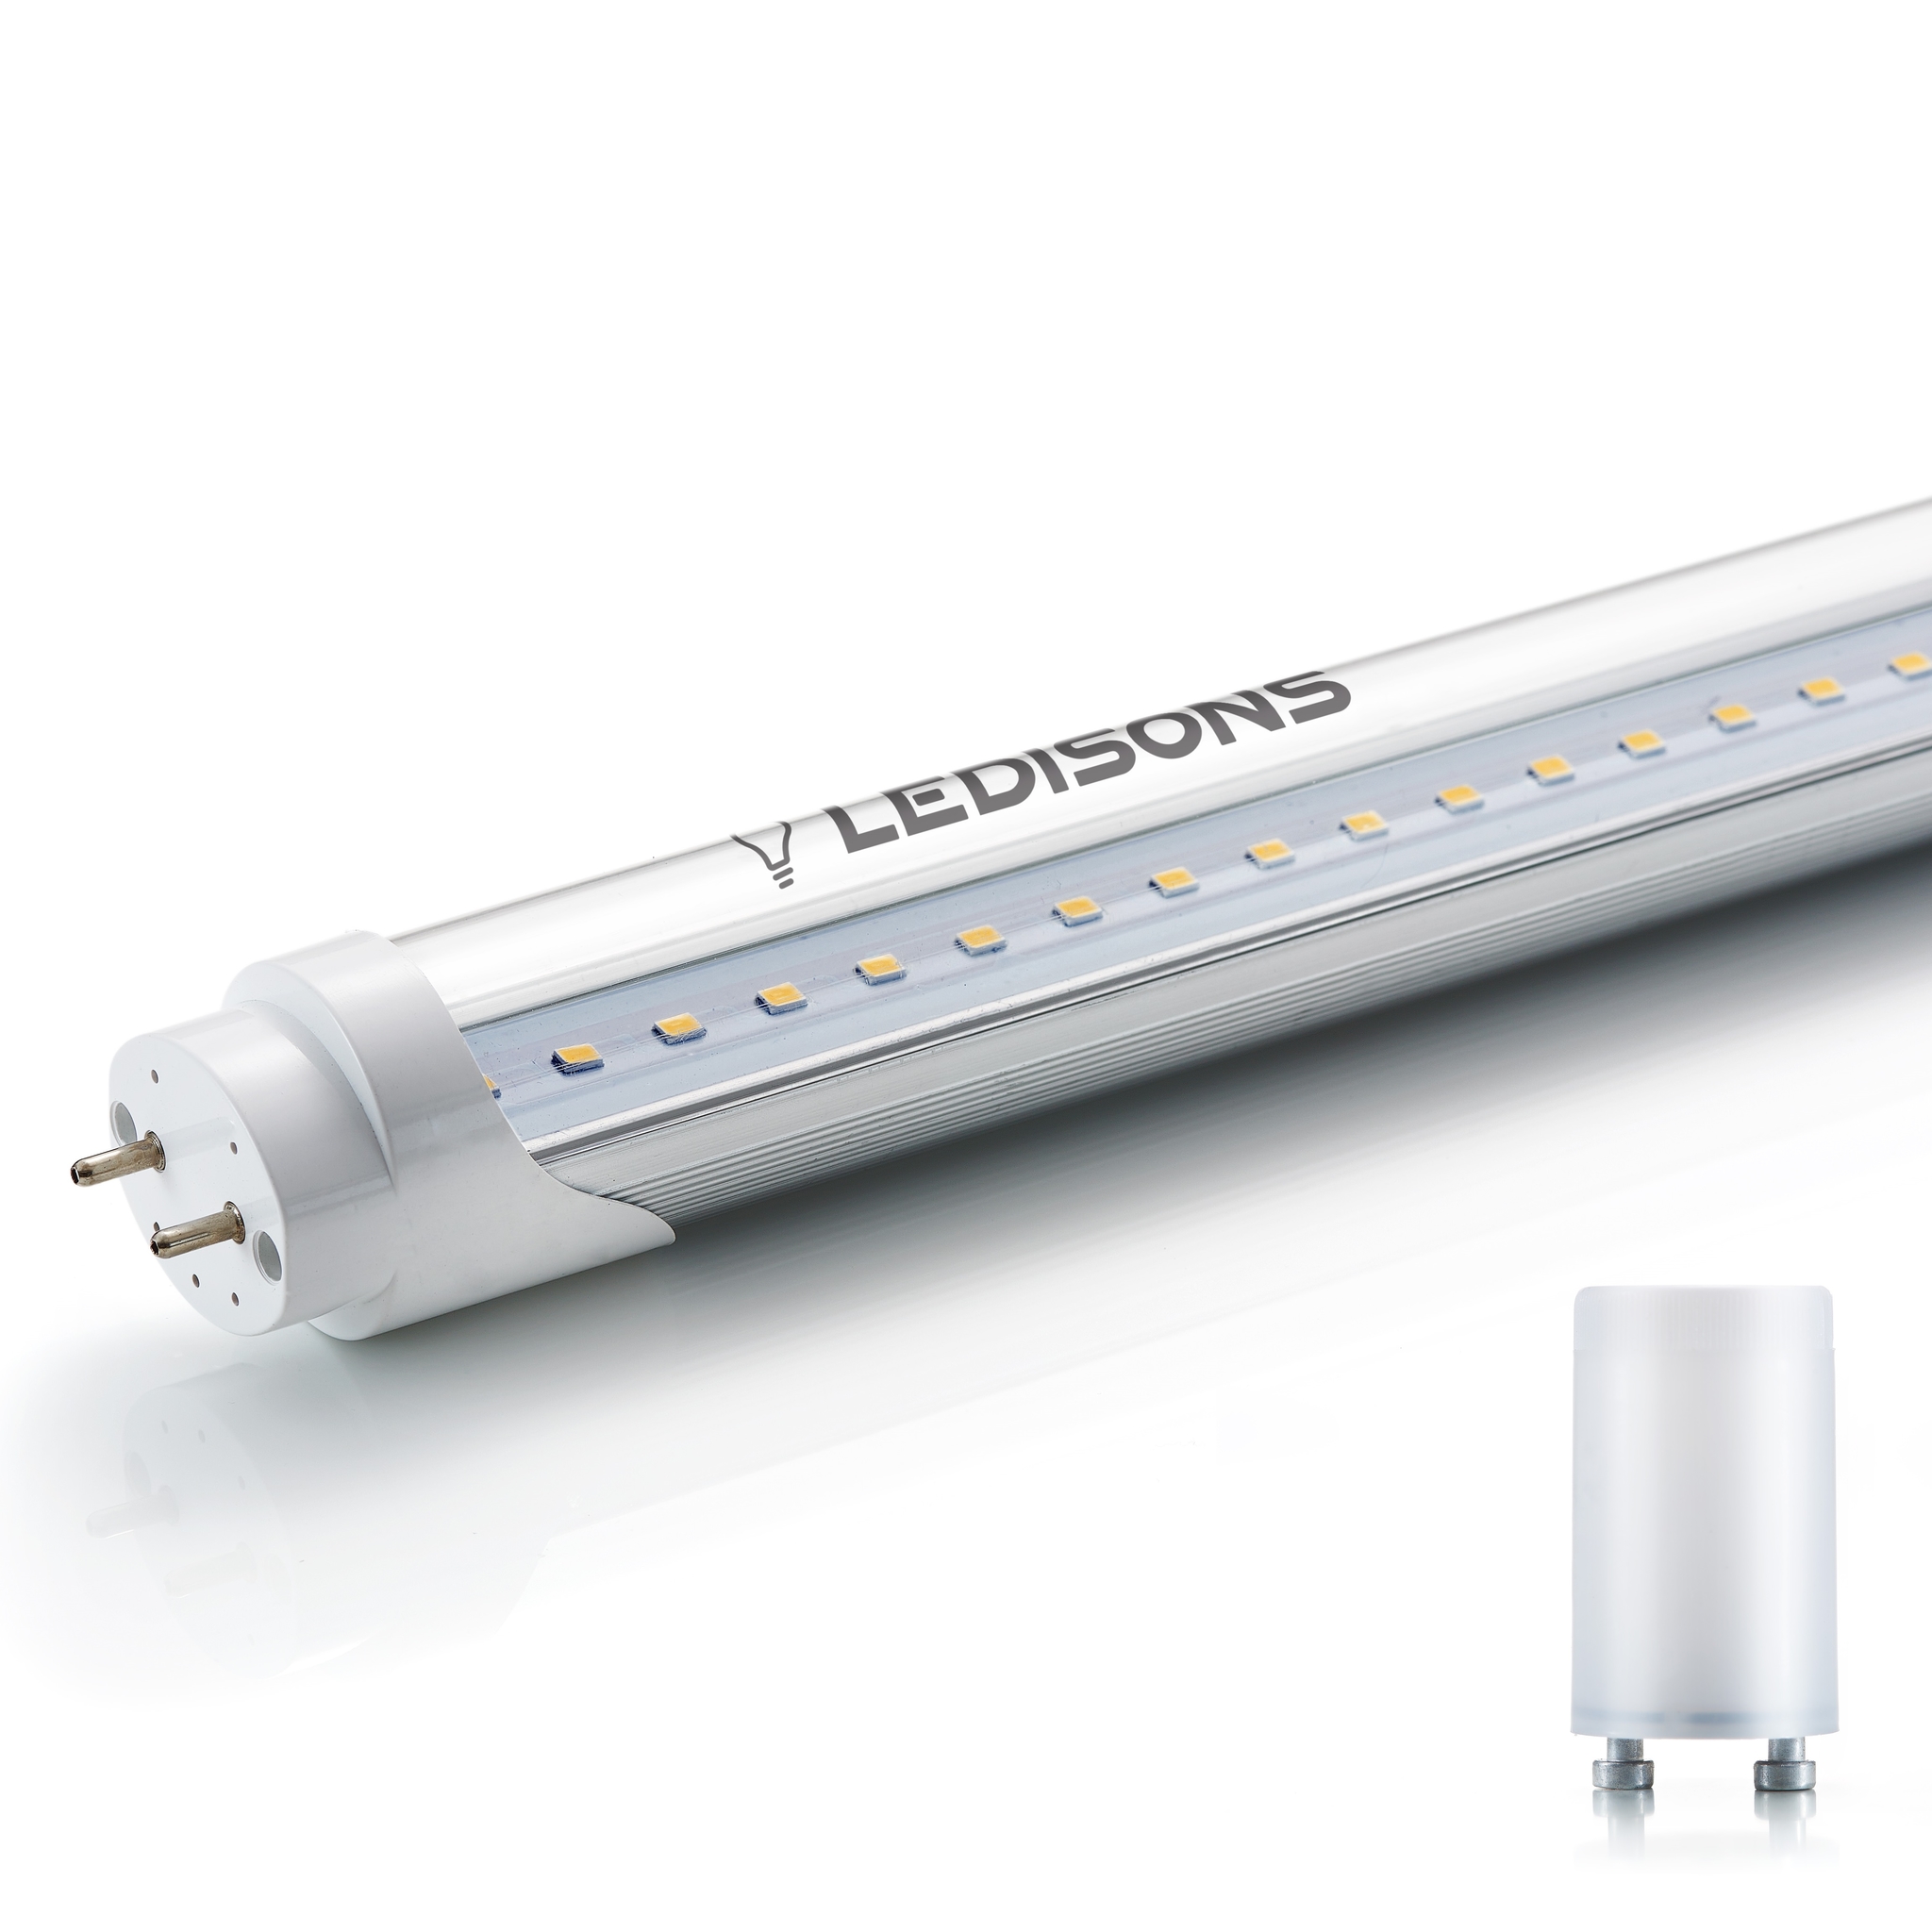 Bondgenoot knijpen Winst LED-tl-buis Tubus Ultra 120 cm koud-wit extra helder transparant - Led  Wereld